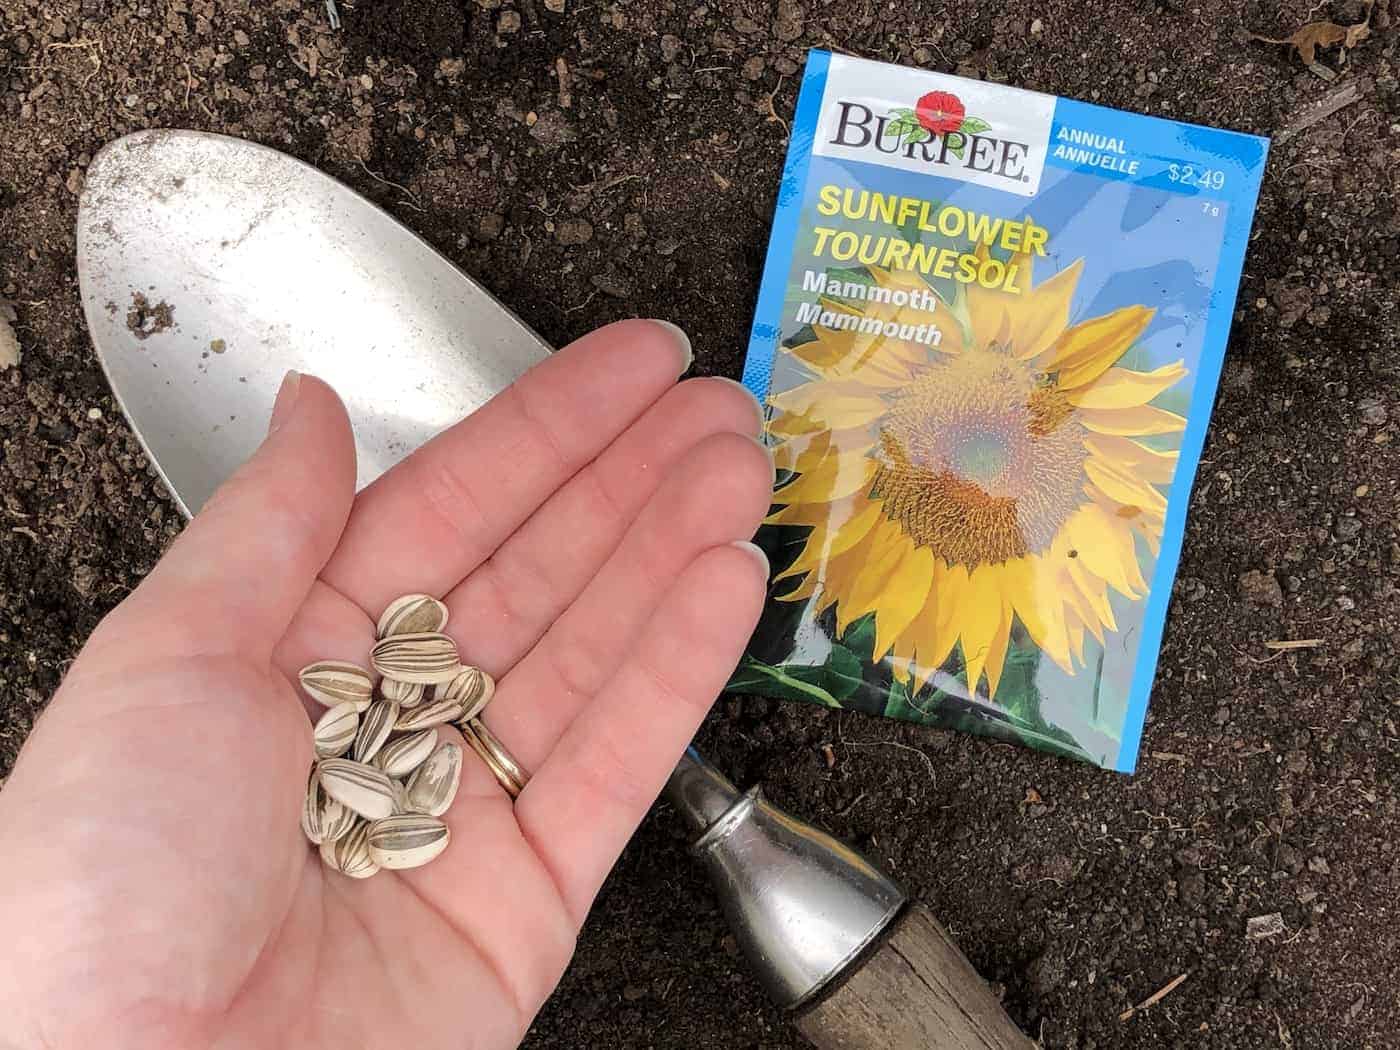 Planting sunflowers